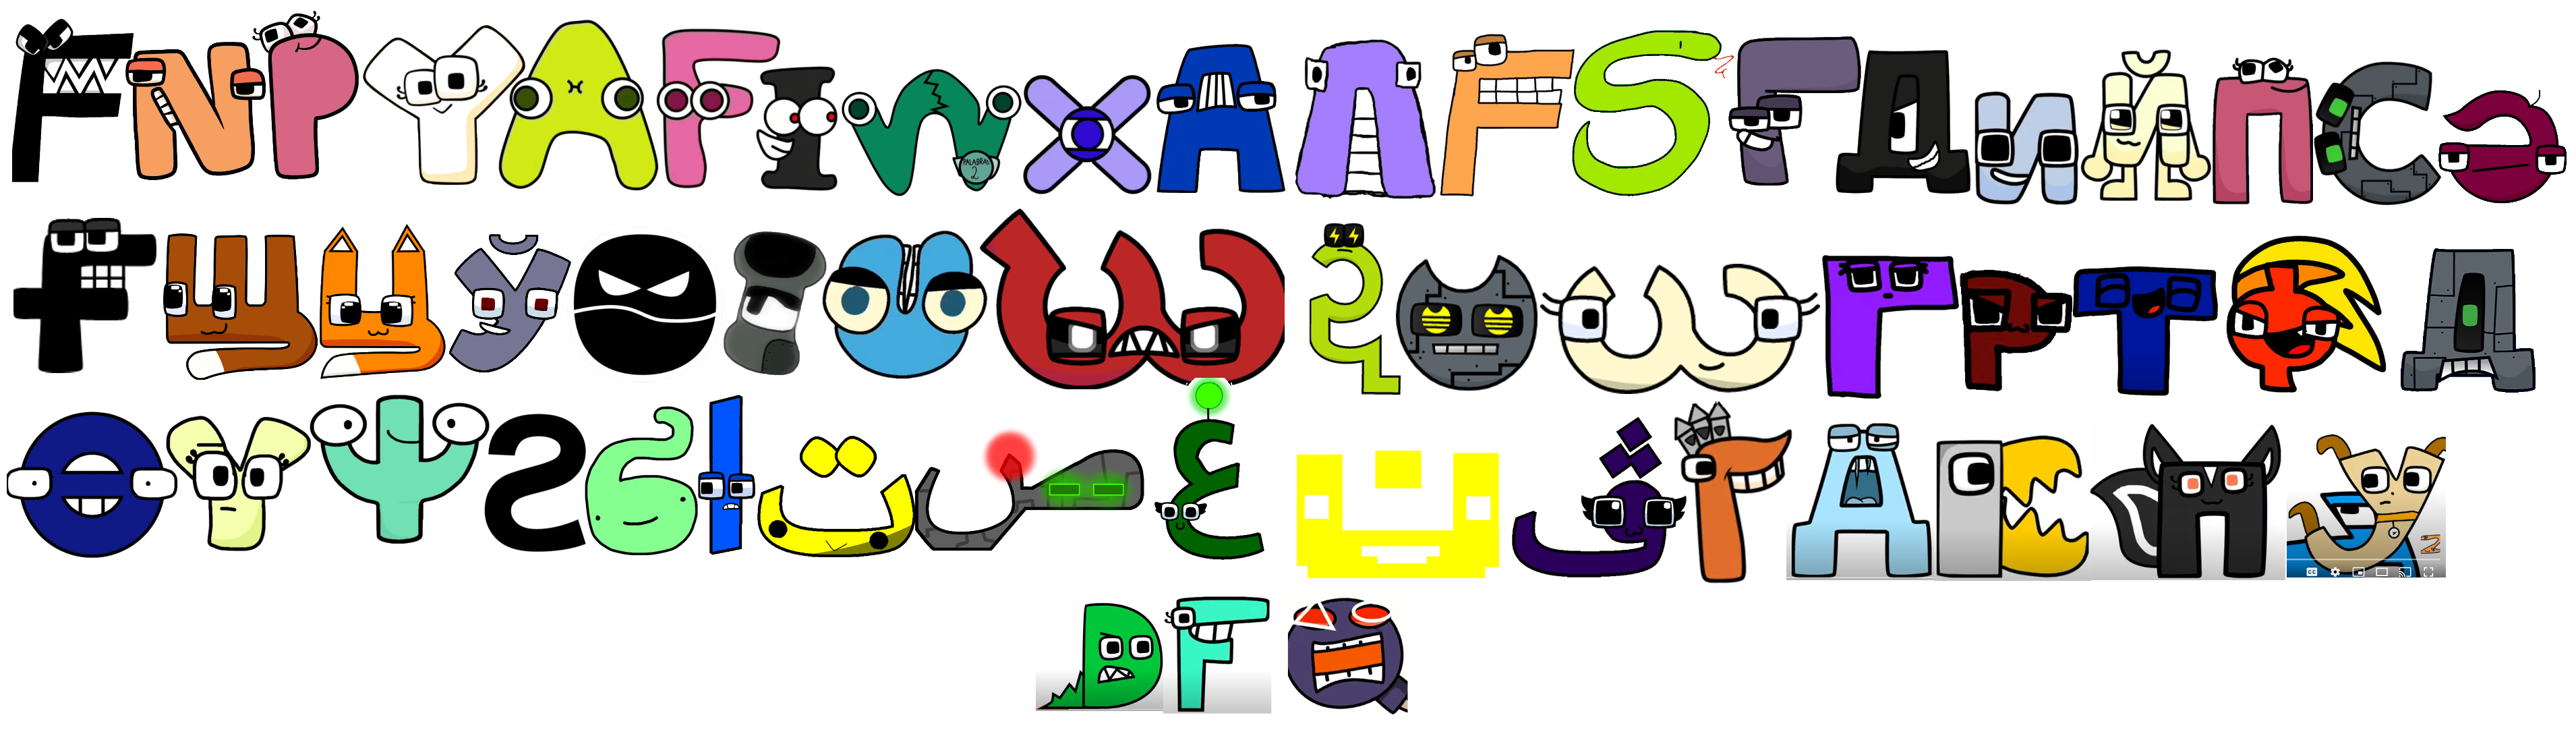 Spanish Alphabet Lore Base by FluffyIsCool2022 on DeviantArt